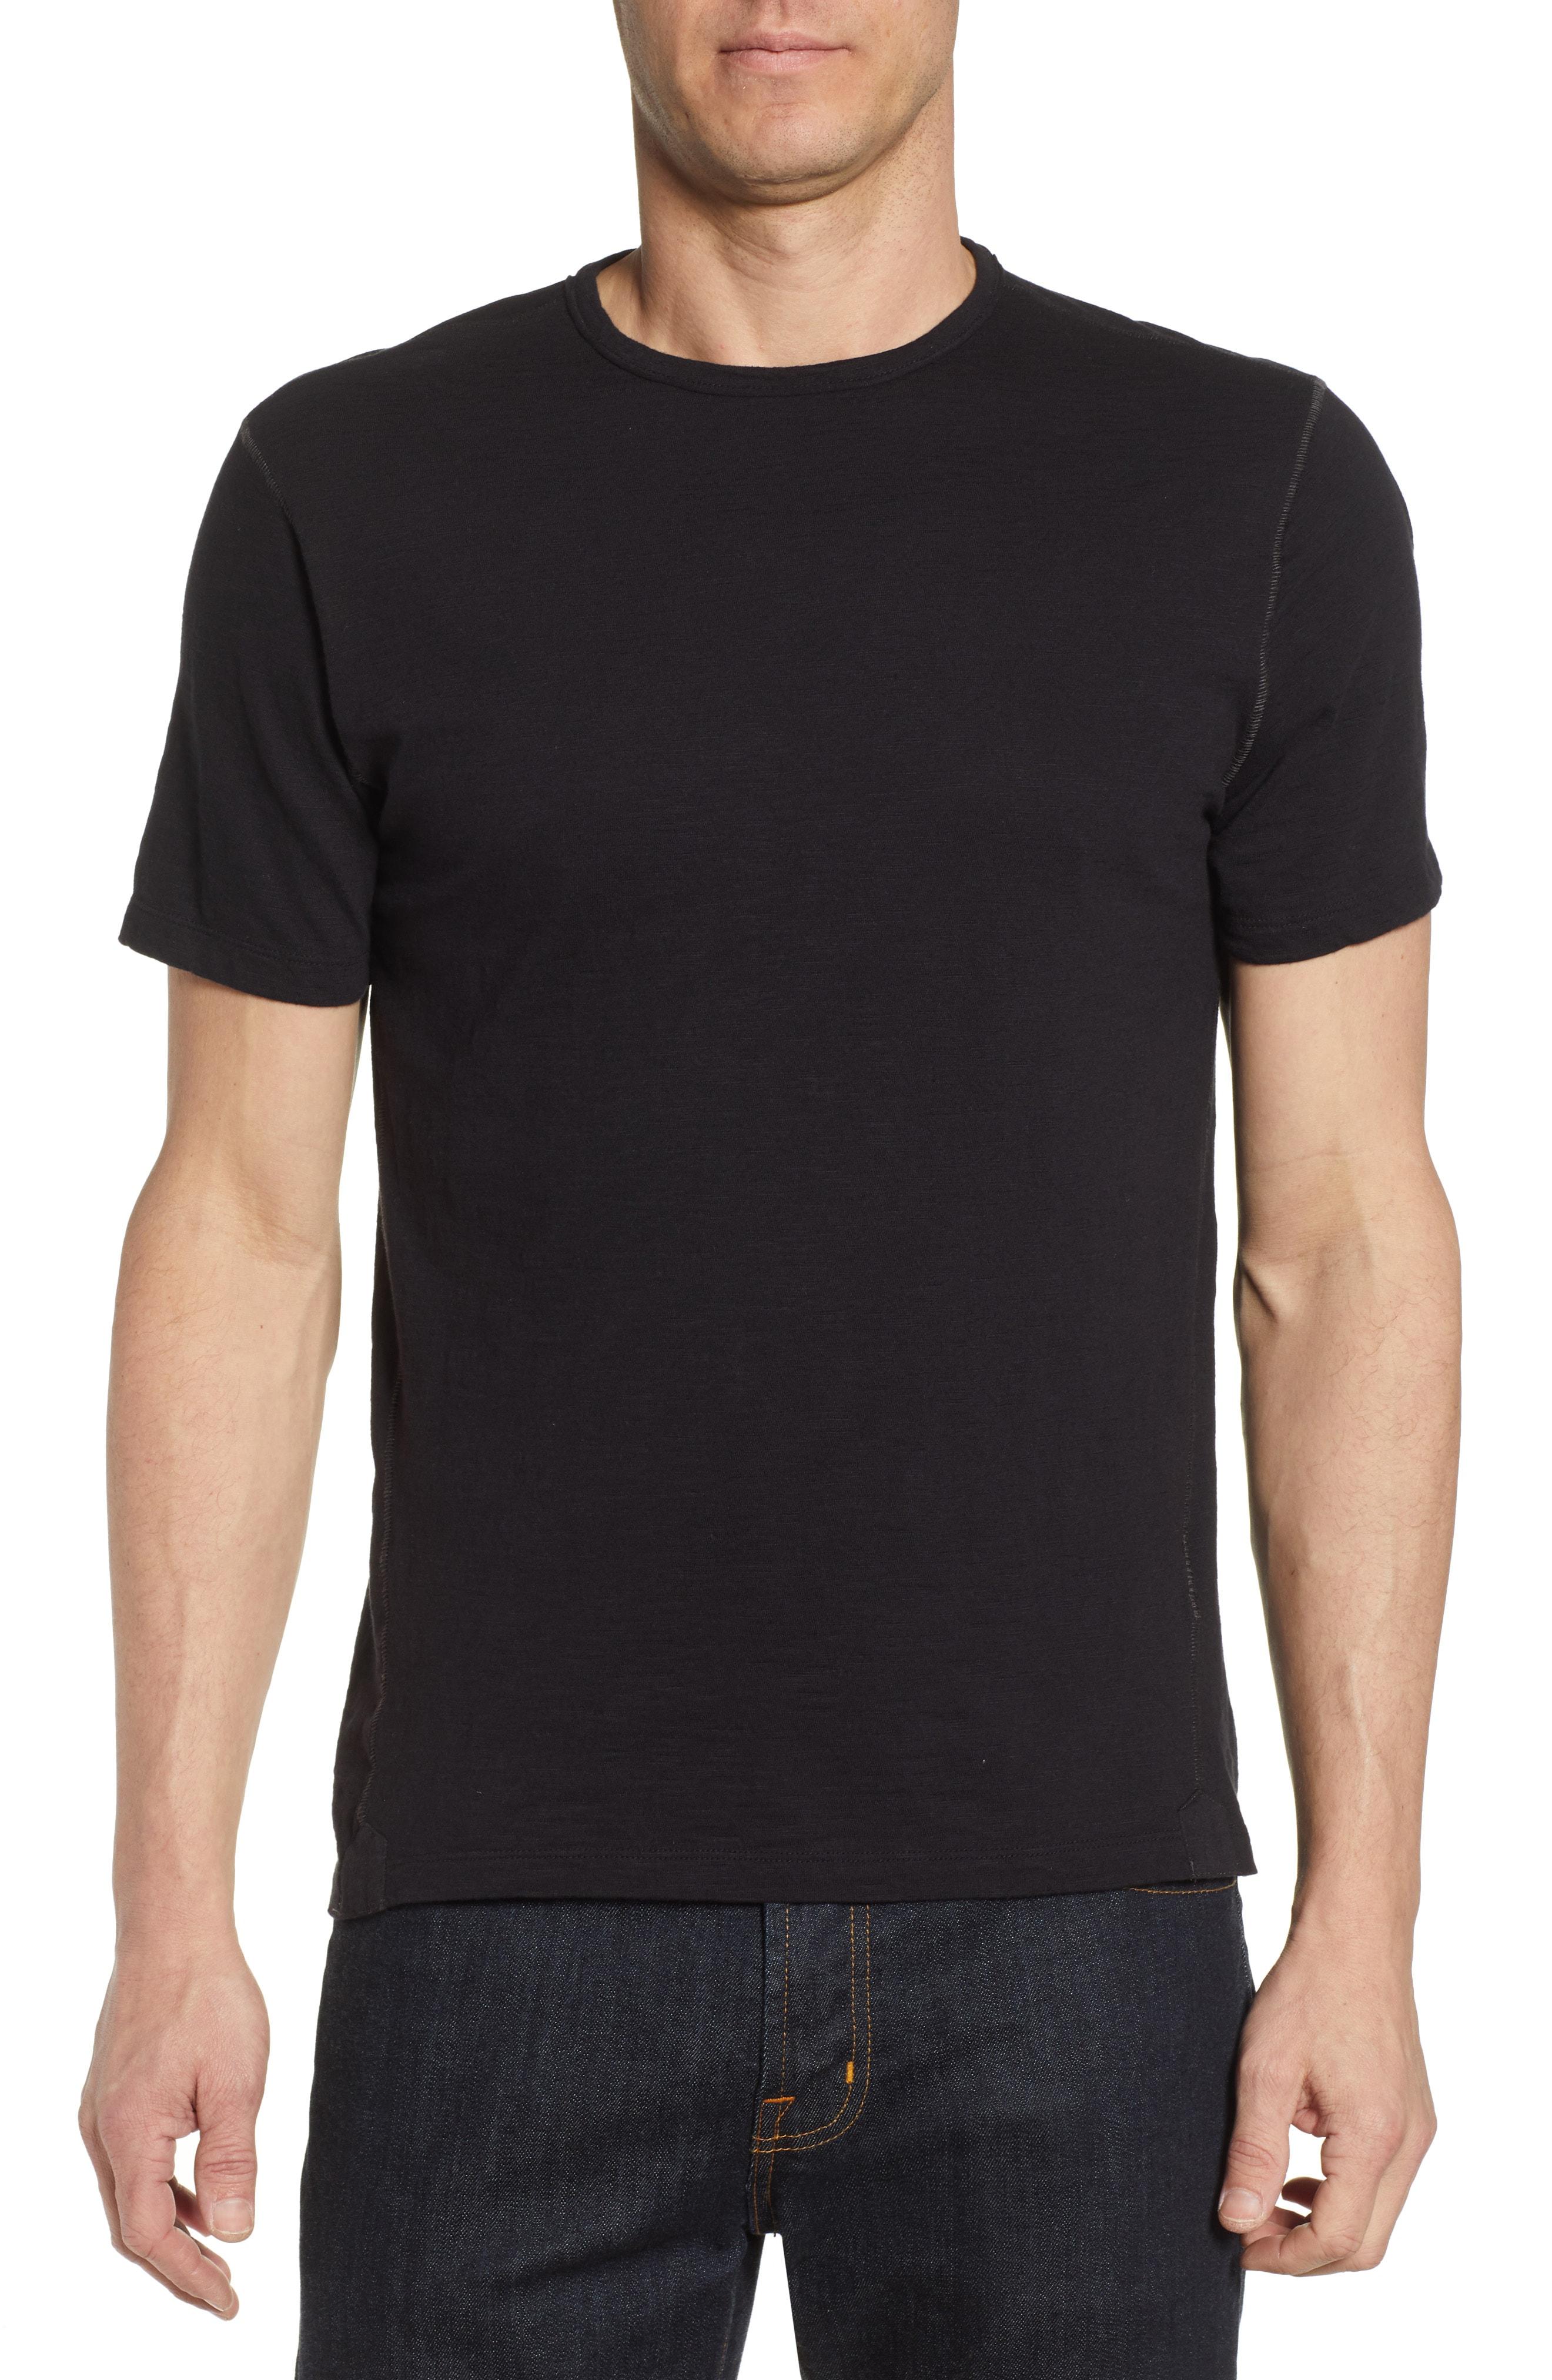 Lyst - Robert Barakett Kamloops Regular Fit T-shirt in Black for Men